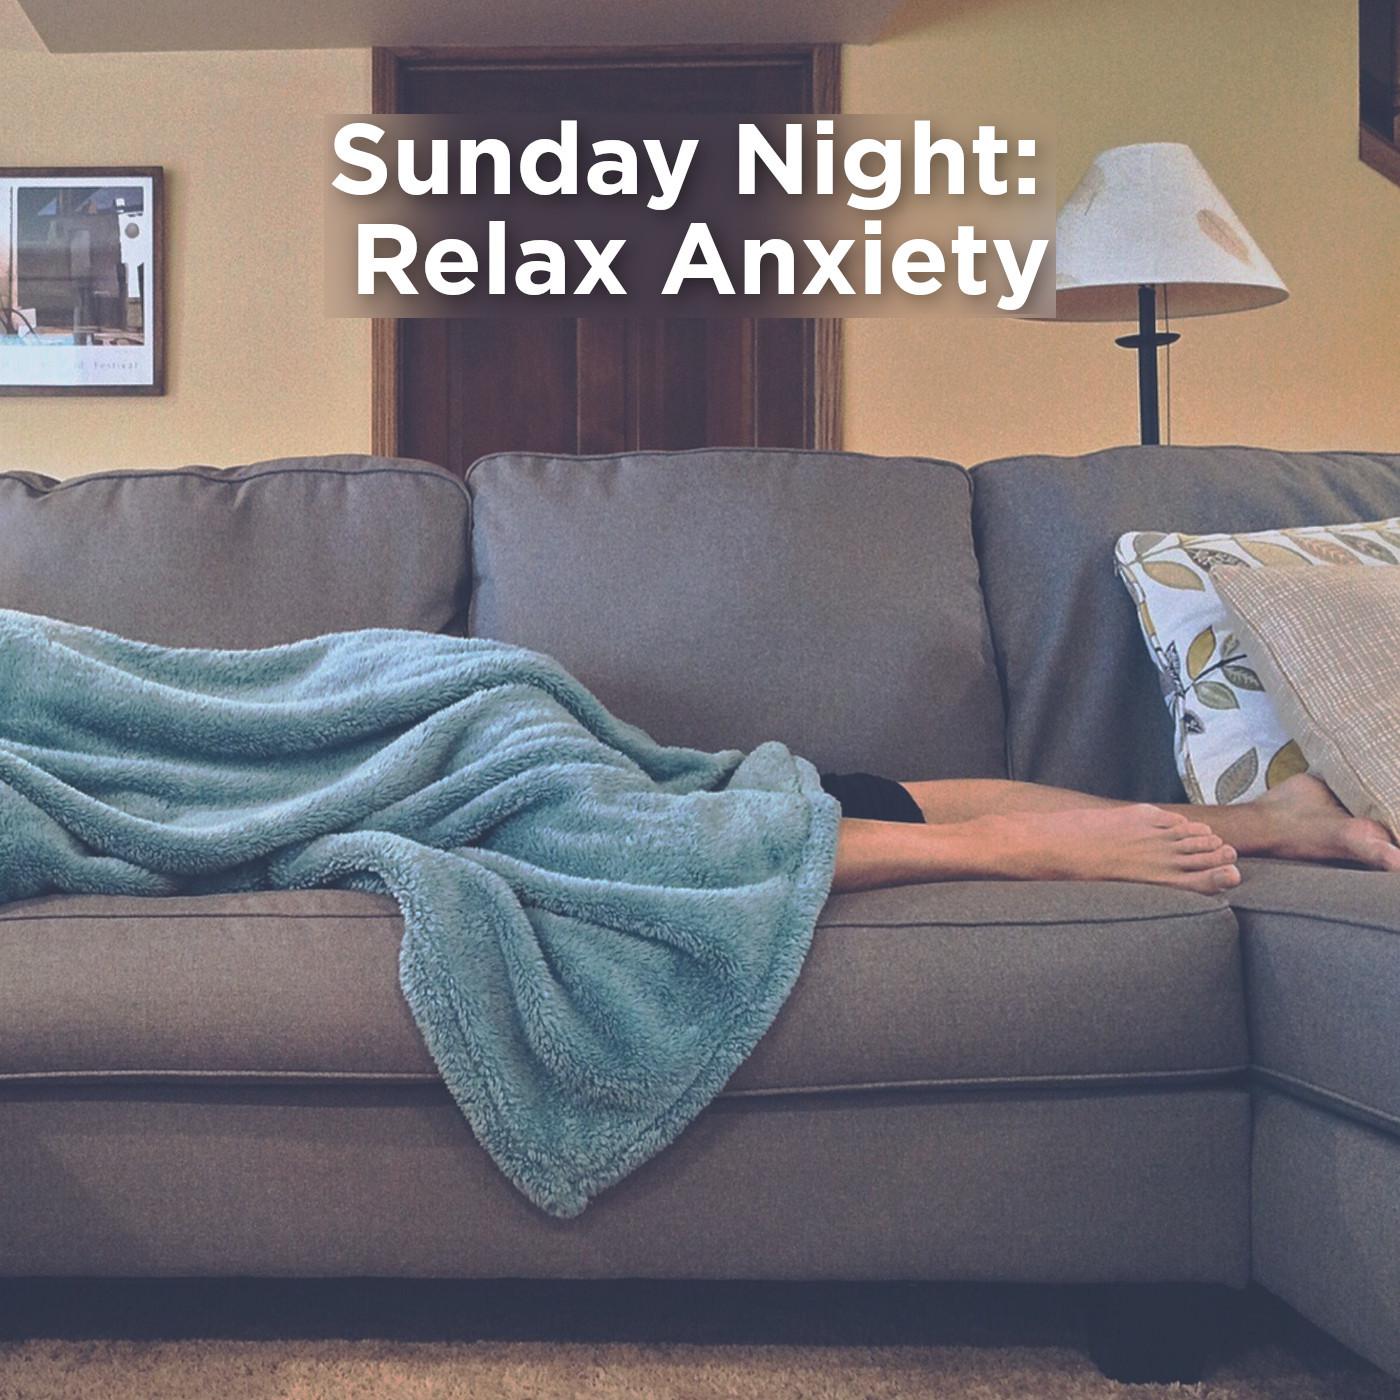 Sunday Night: Relax Anxiety